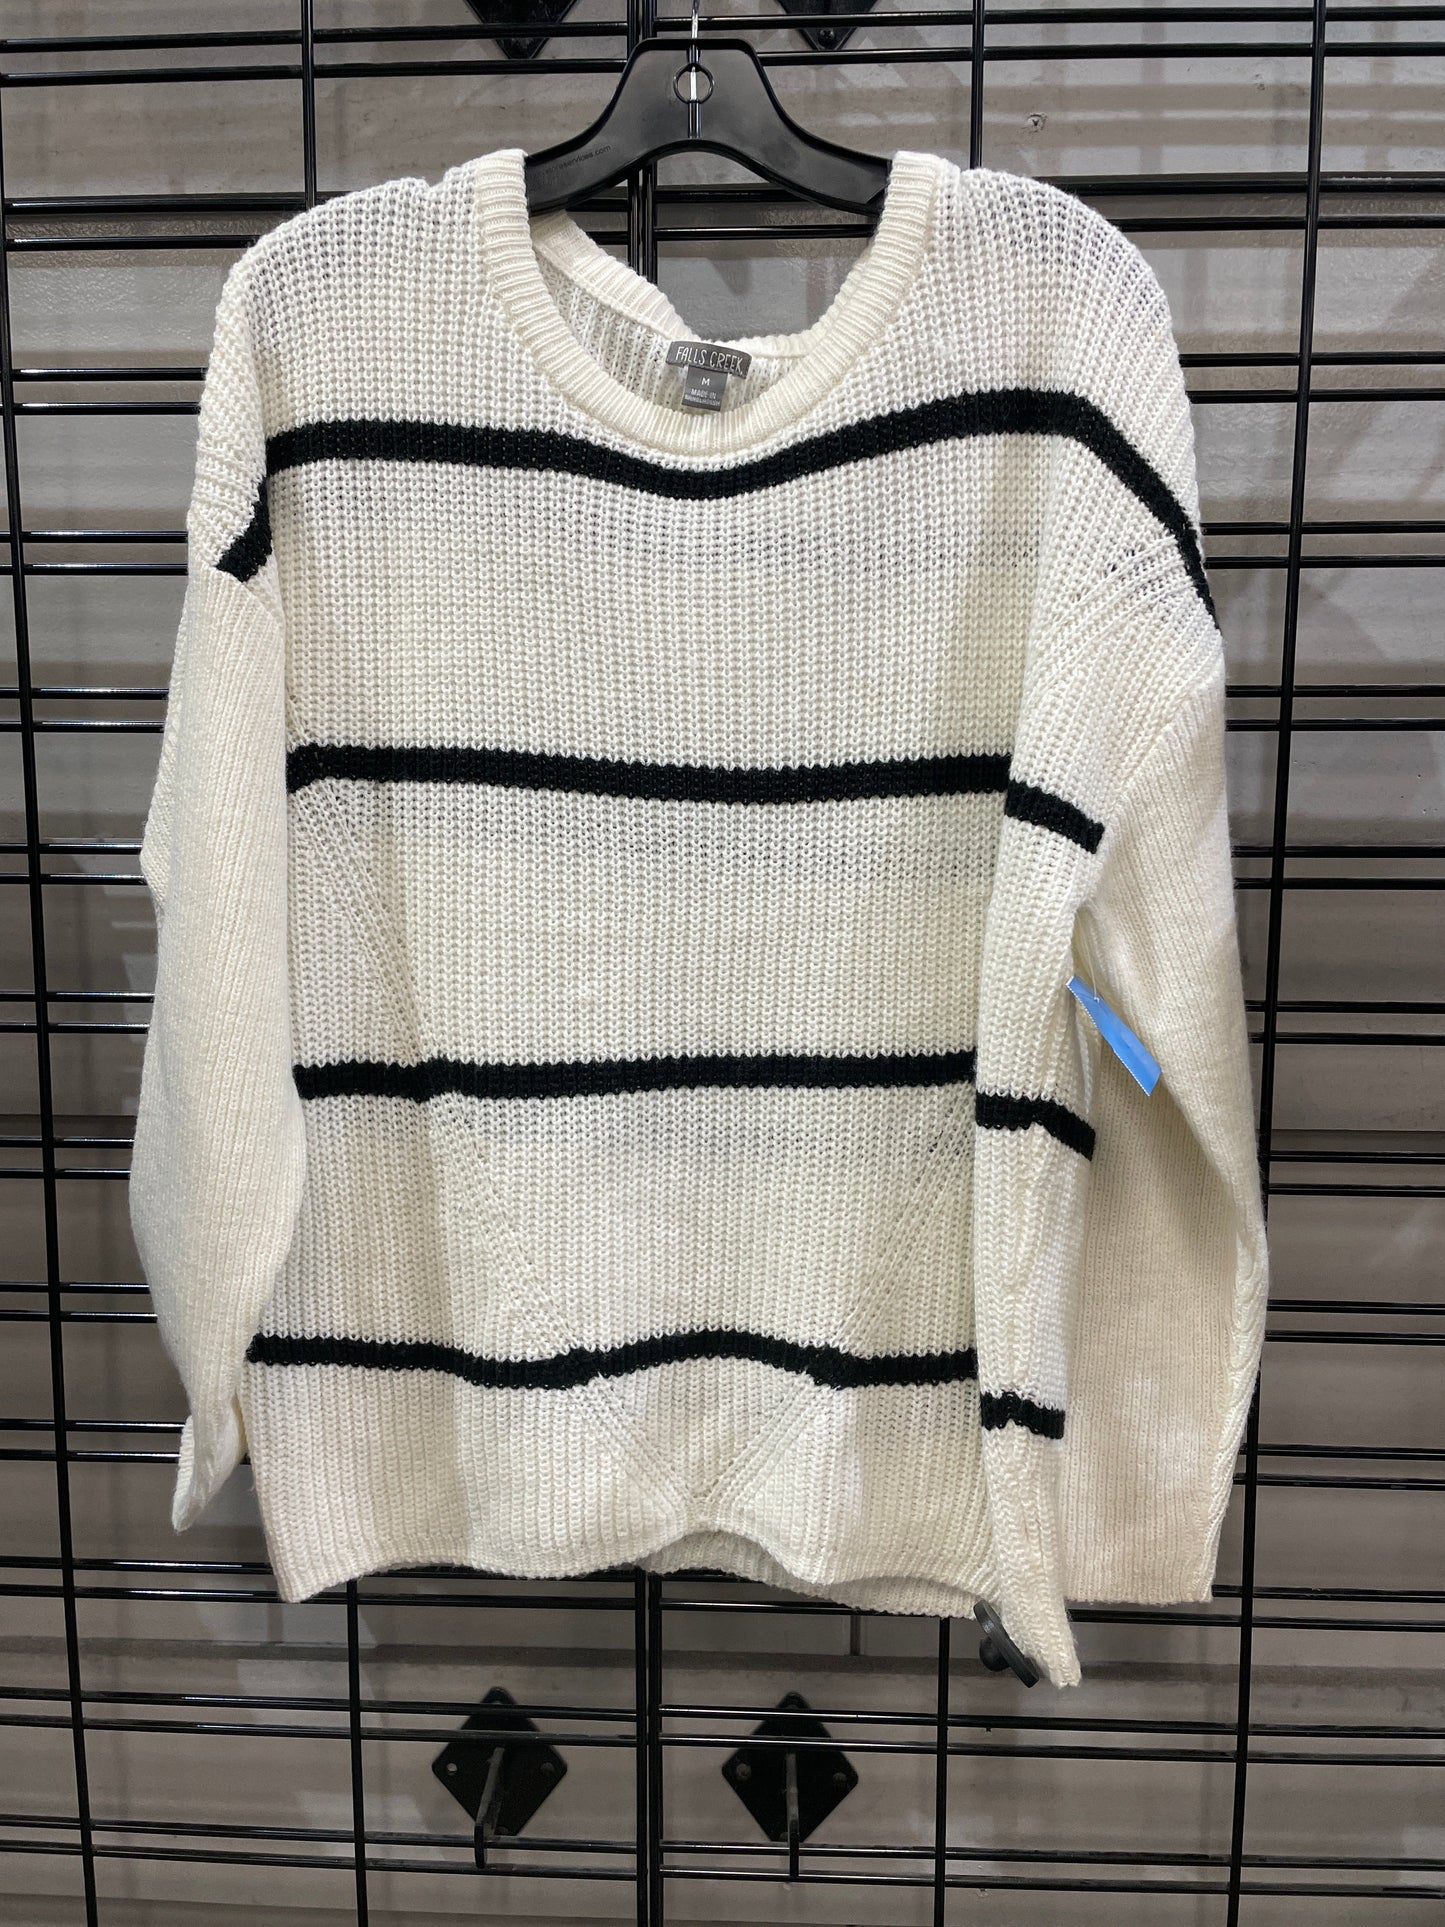 Sweater By Falls Creek  Size: M